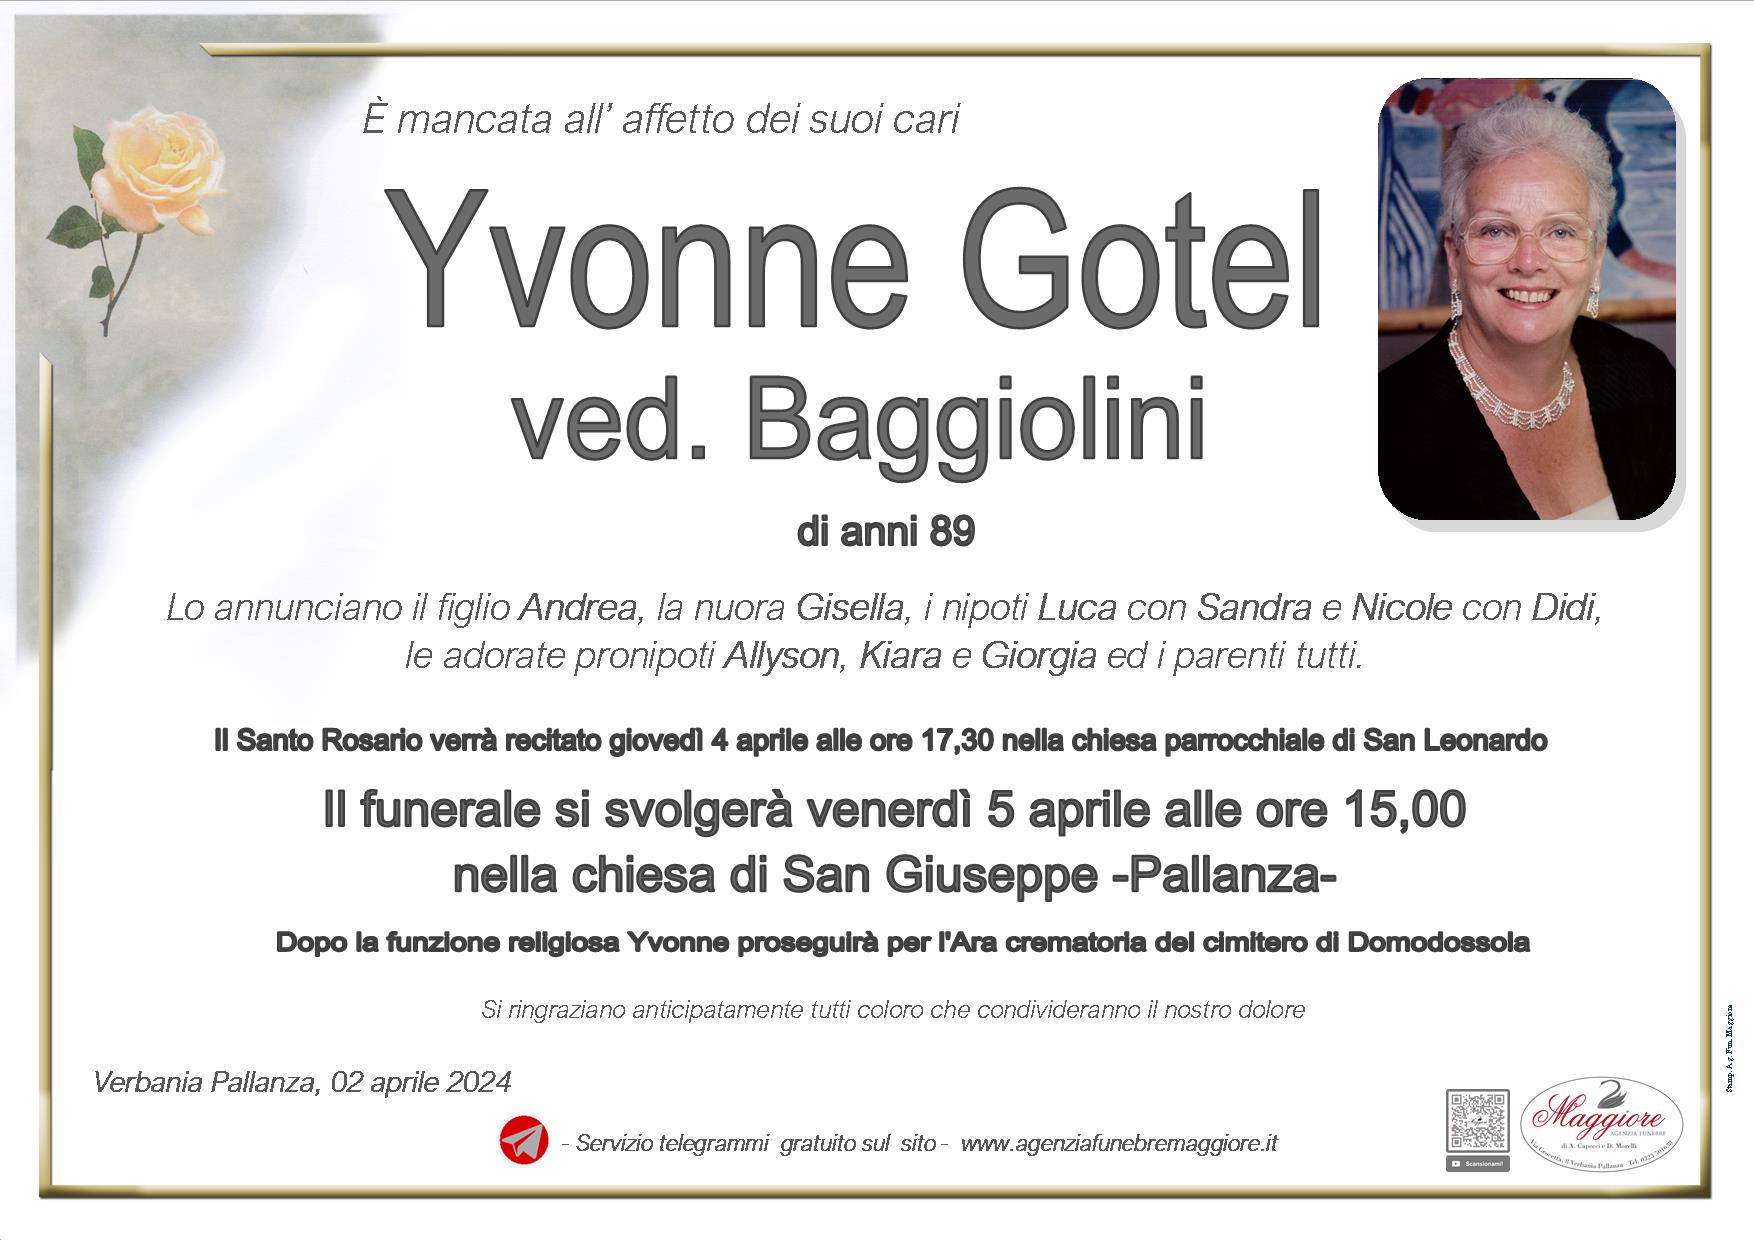 Yvonne Gotel ved. Baggiolini